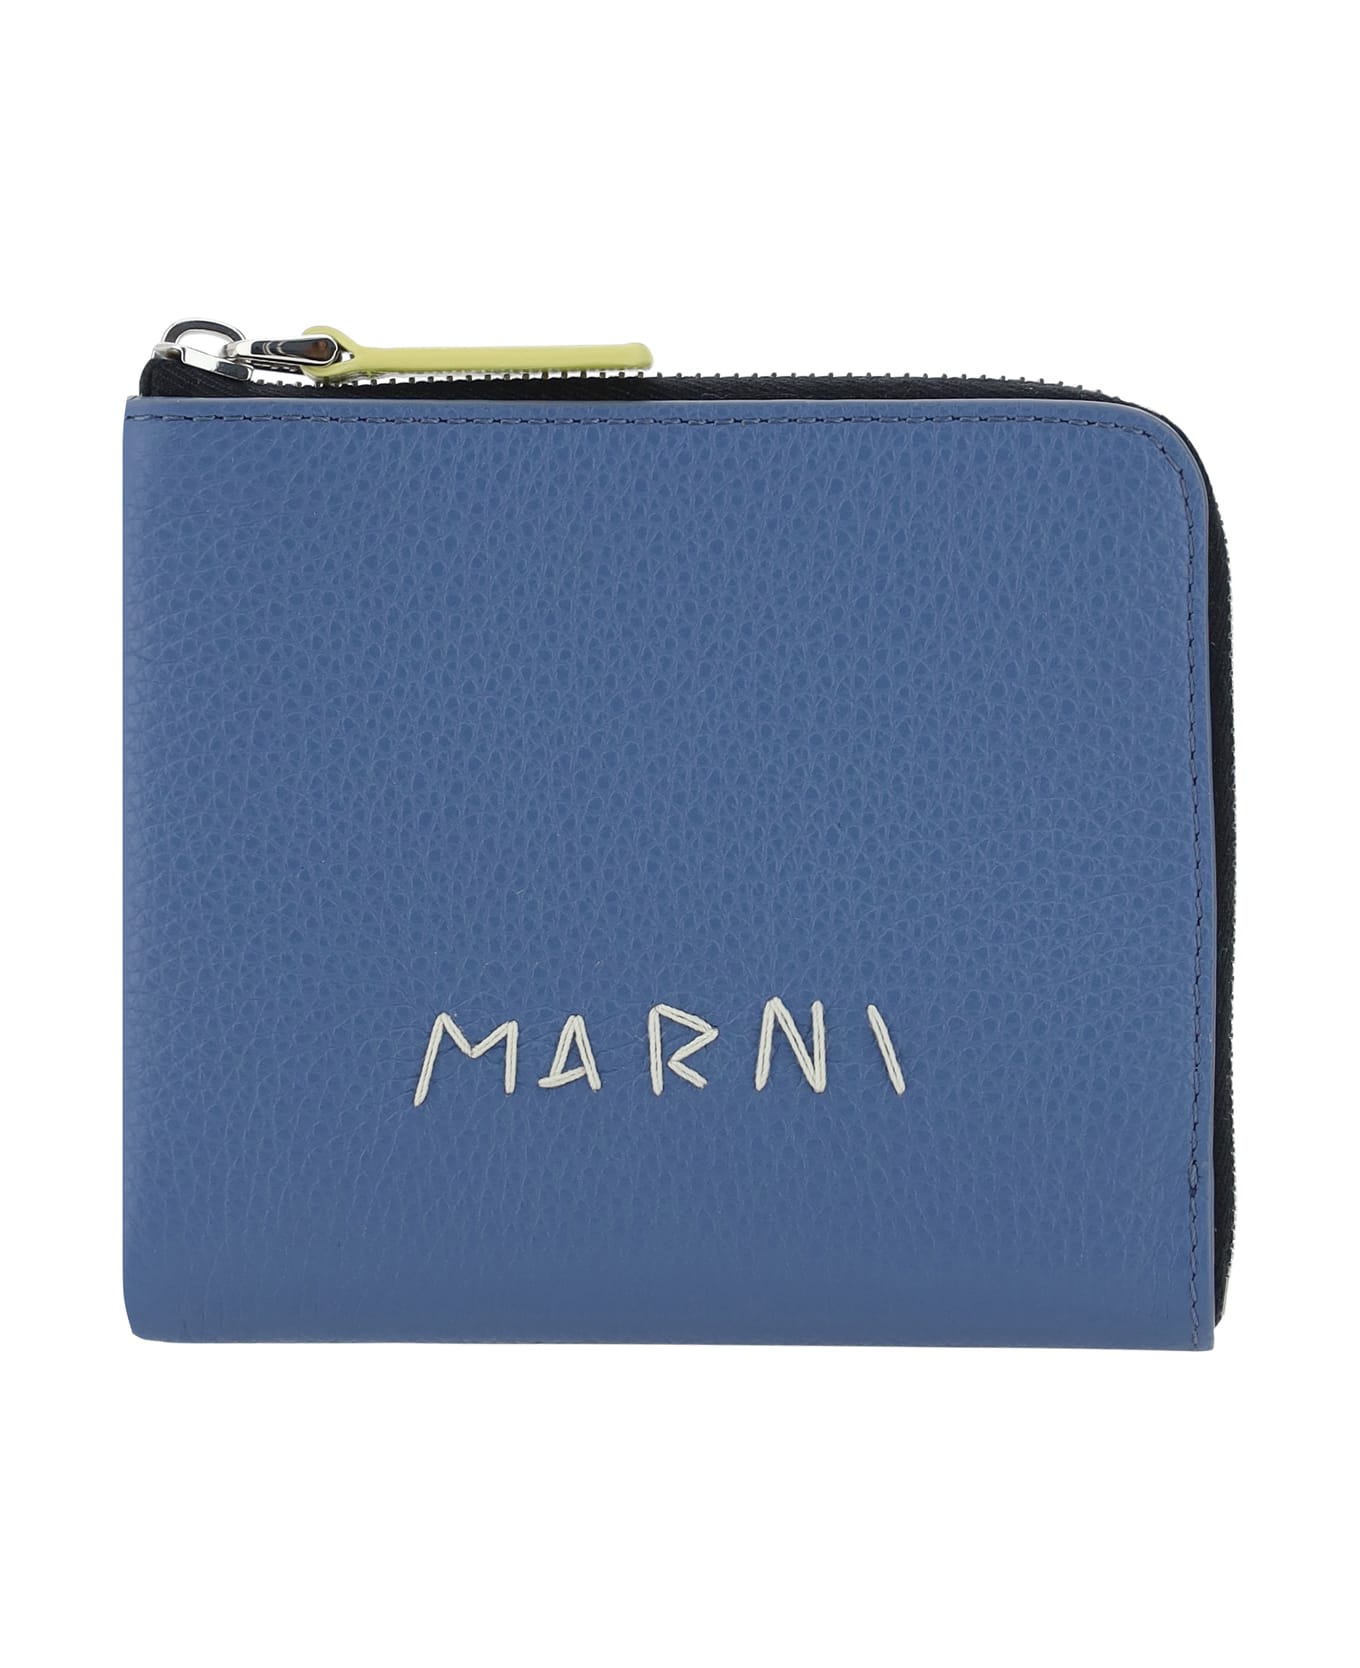 Marni Wallet - Gnawed Blue